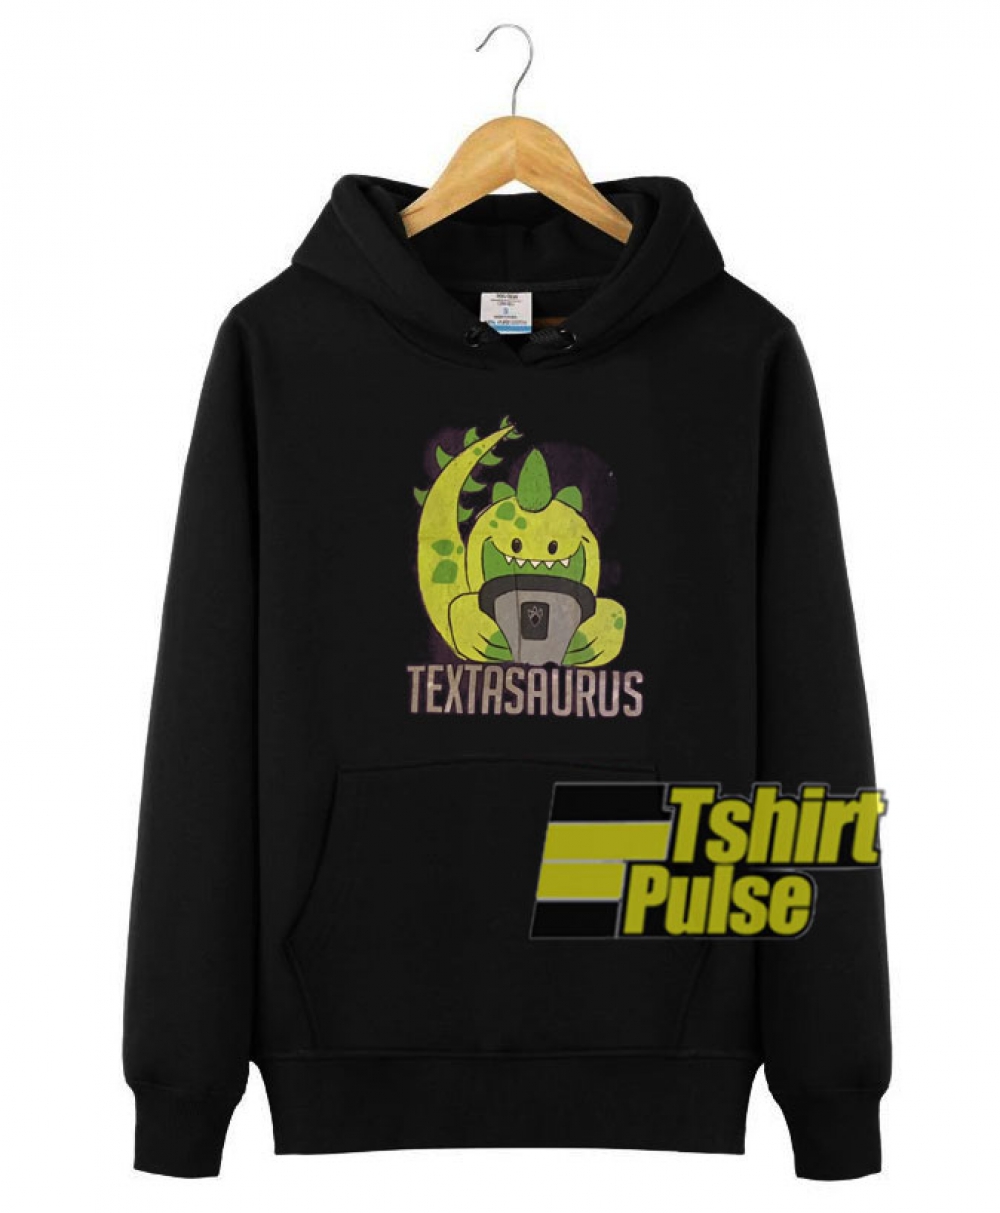 Textasaurus Art hooded sweatshirt clothing unisex hoodie